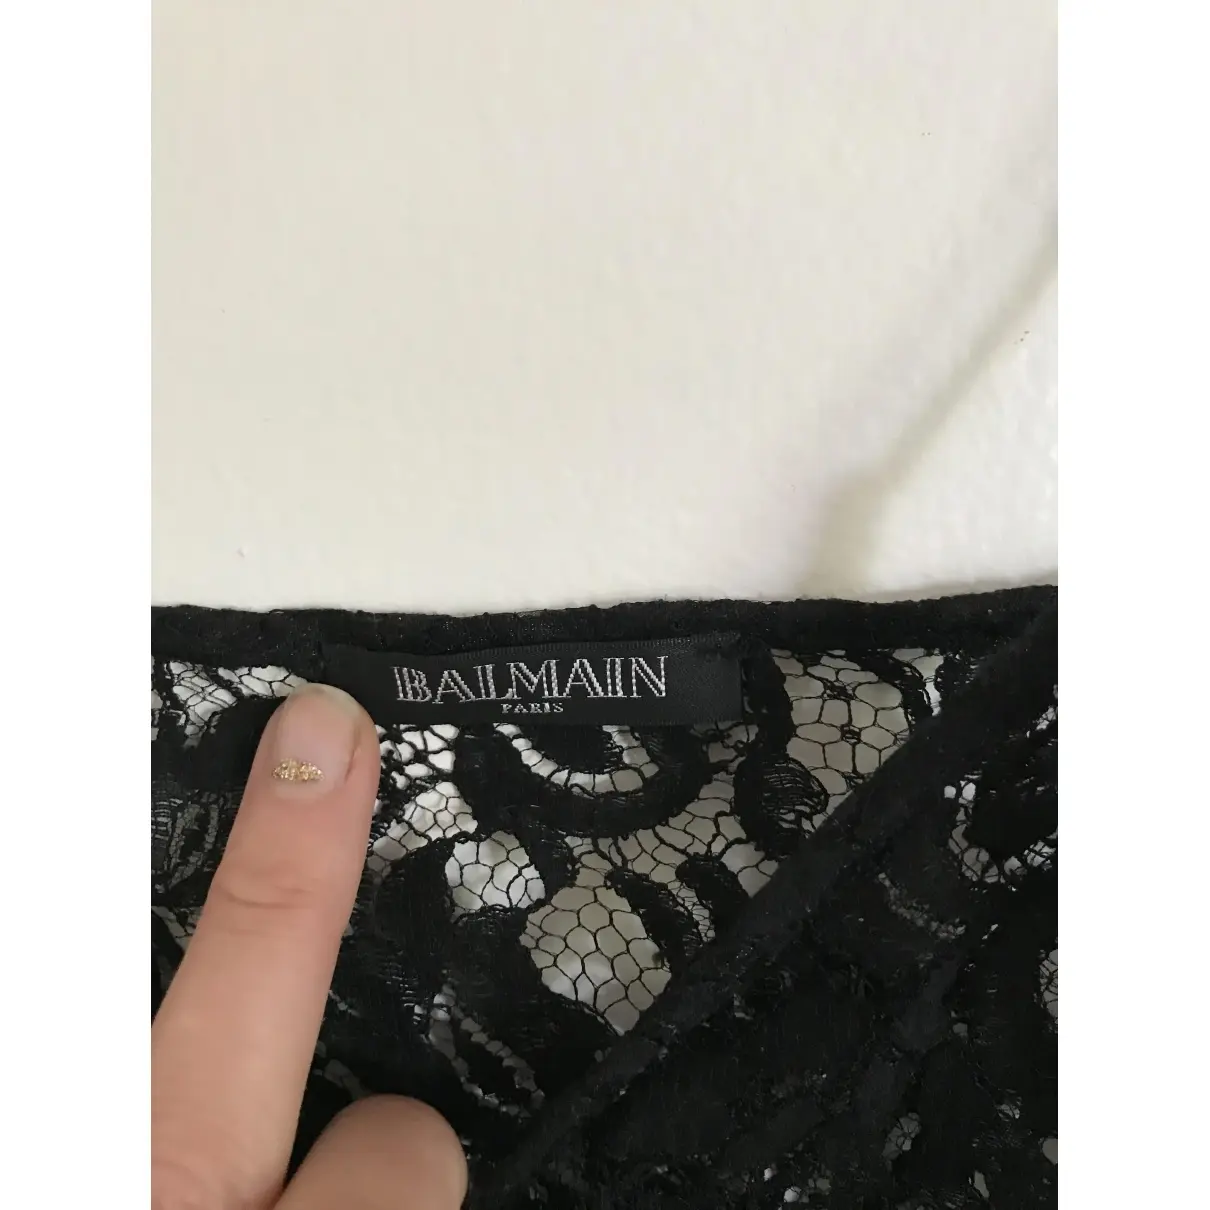 Balmain Lace camisole for sale